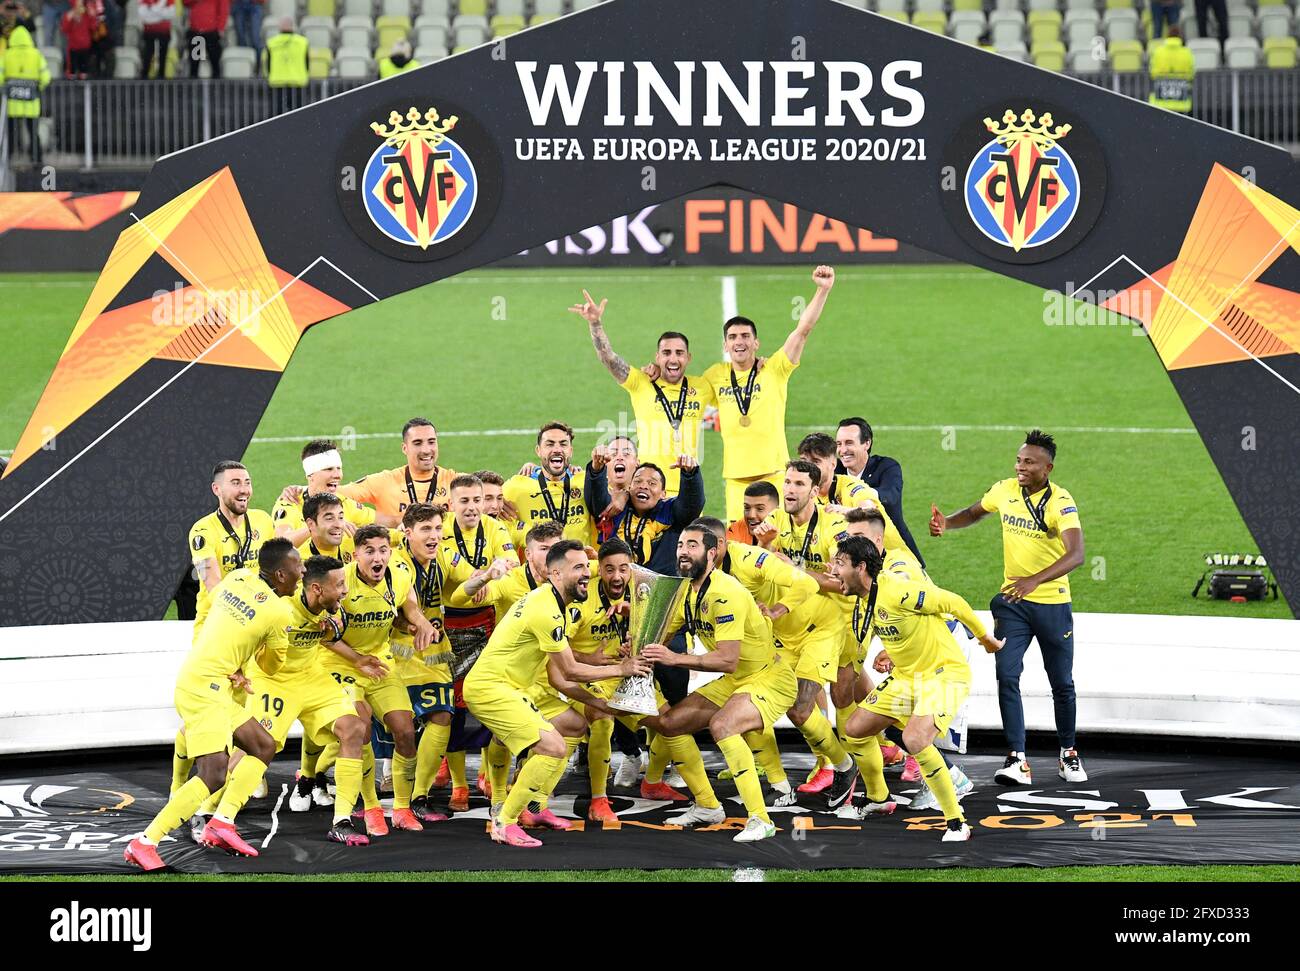 Villarreal feiert den Gewinn des UEFA Europa League Finales im Danziger Stadion, Polen. Bilddatum: Mittwoch, 26. Mai 2021. Stockfoto